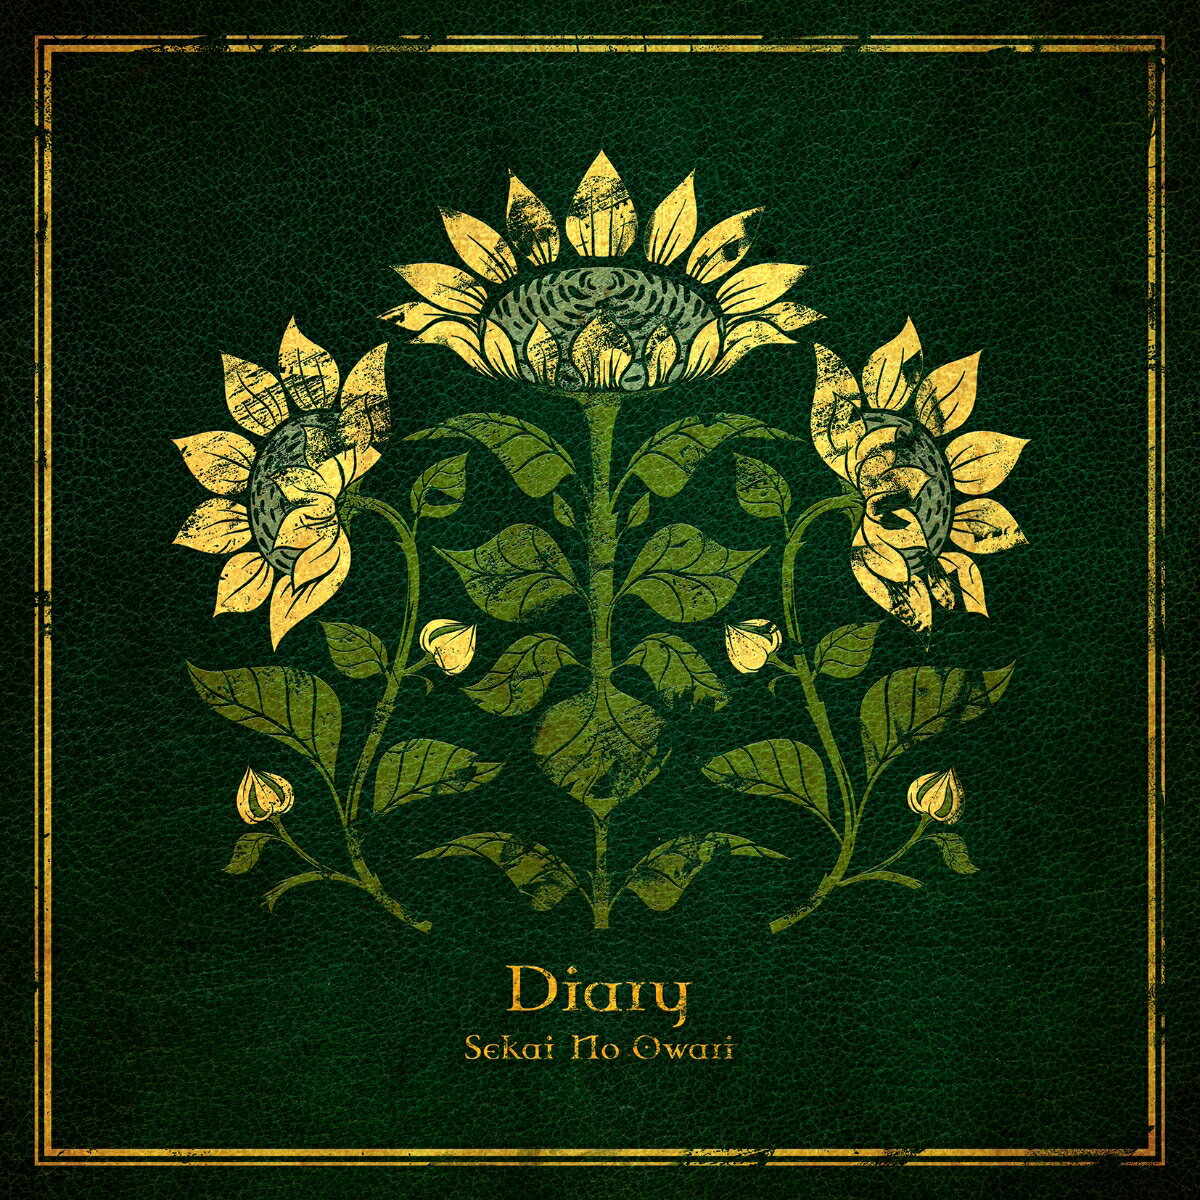 Diary (初回限定盤B CD＋DVD) SEKAI NO OWARI